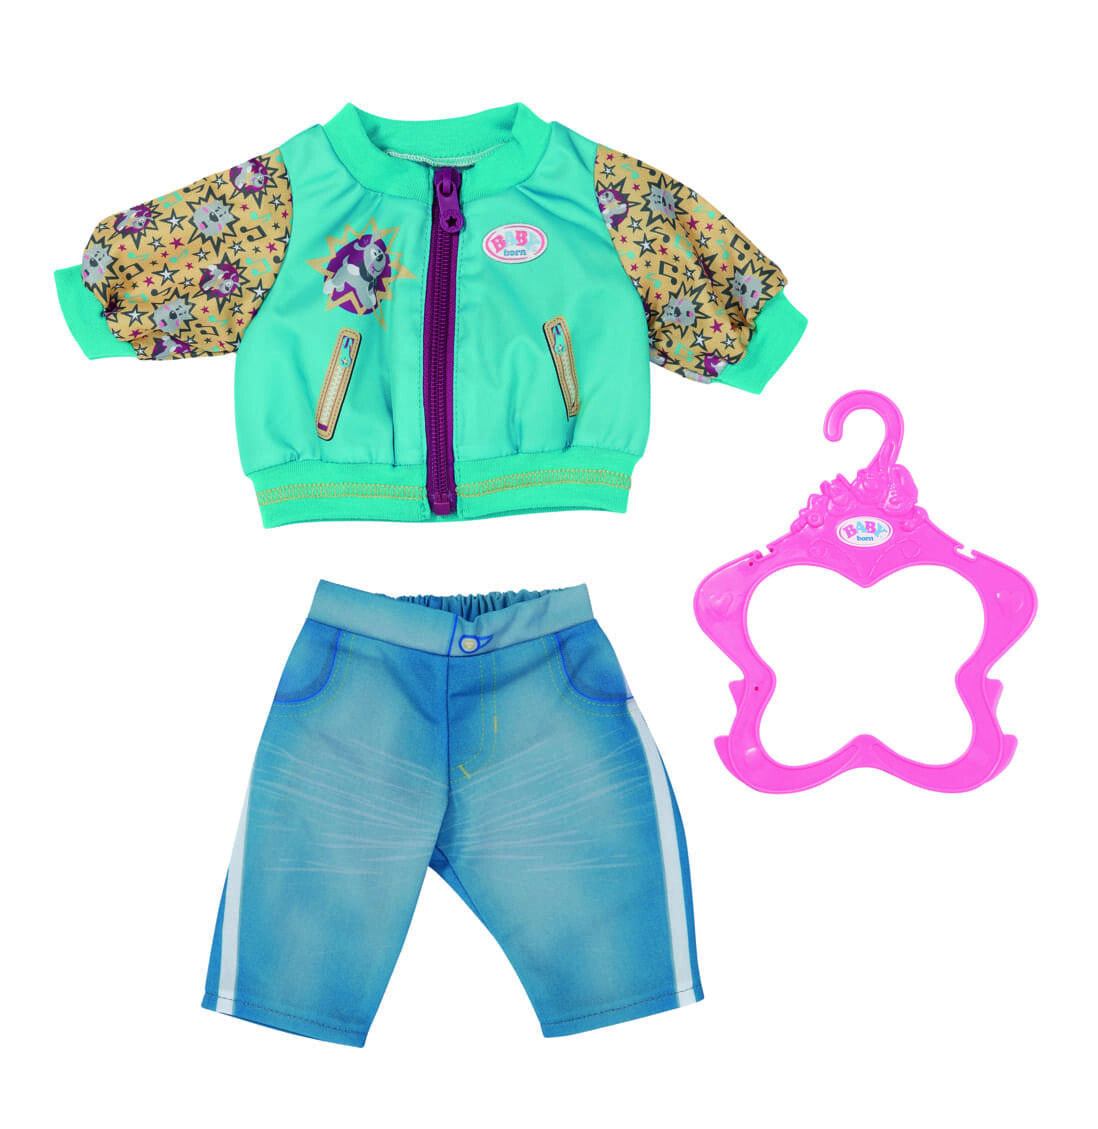 BABY born Outfit with Jacket Комплект одежды для куклы 833599